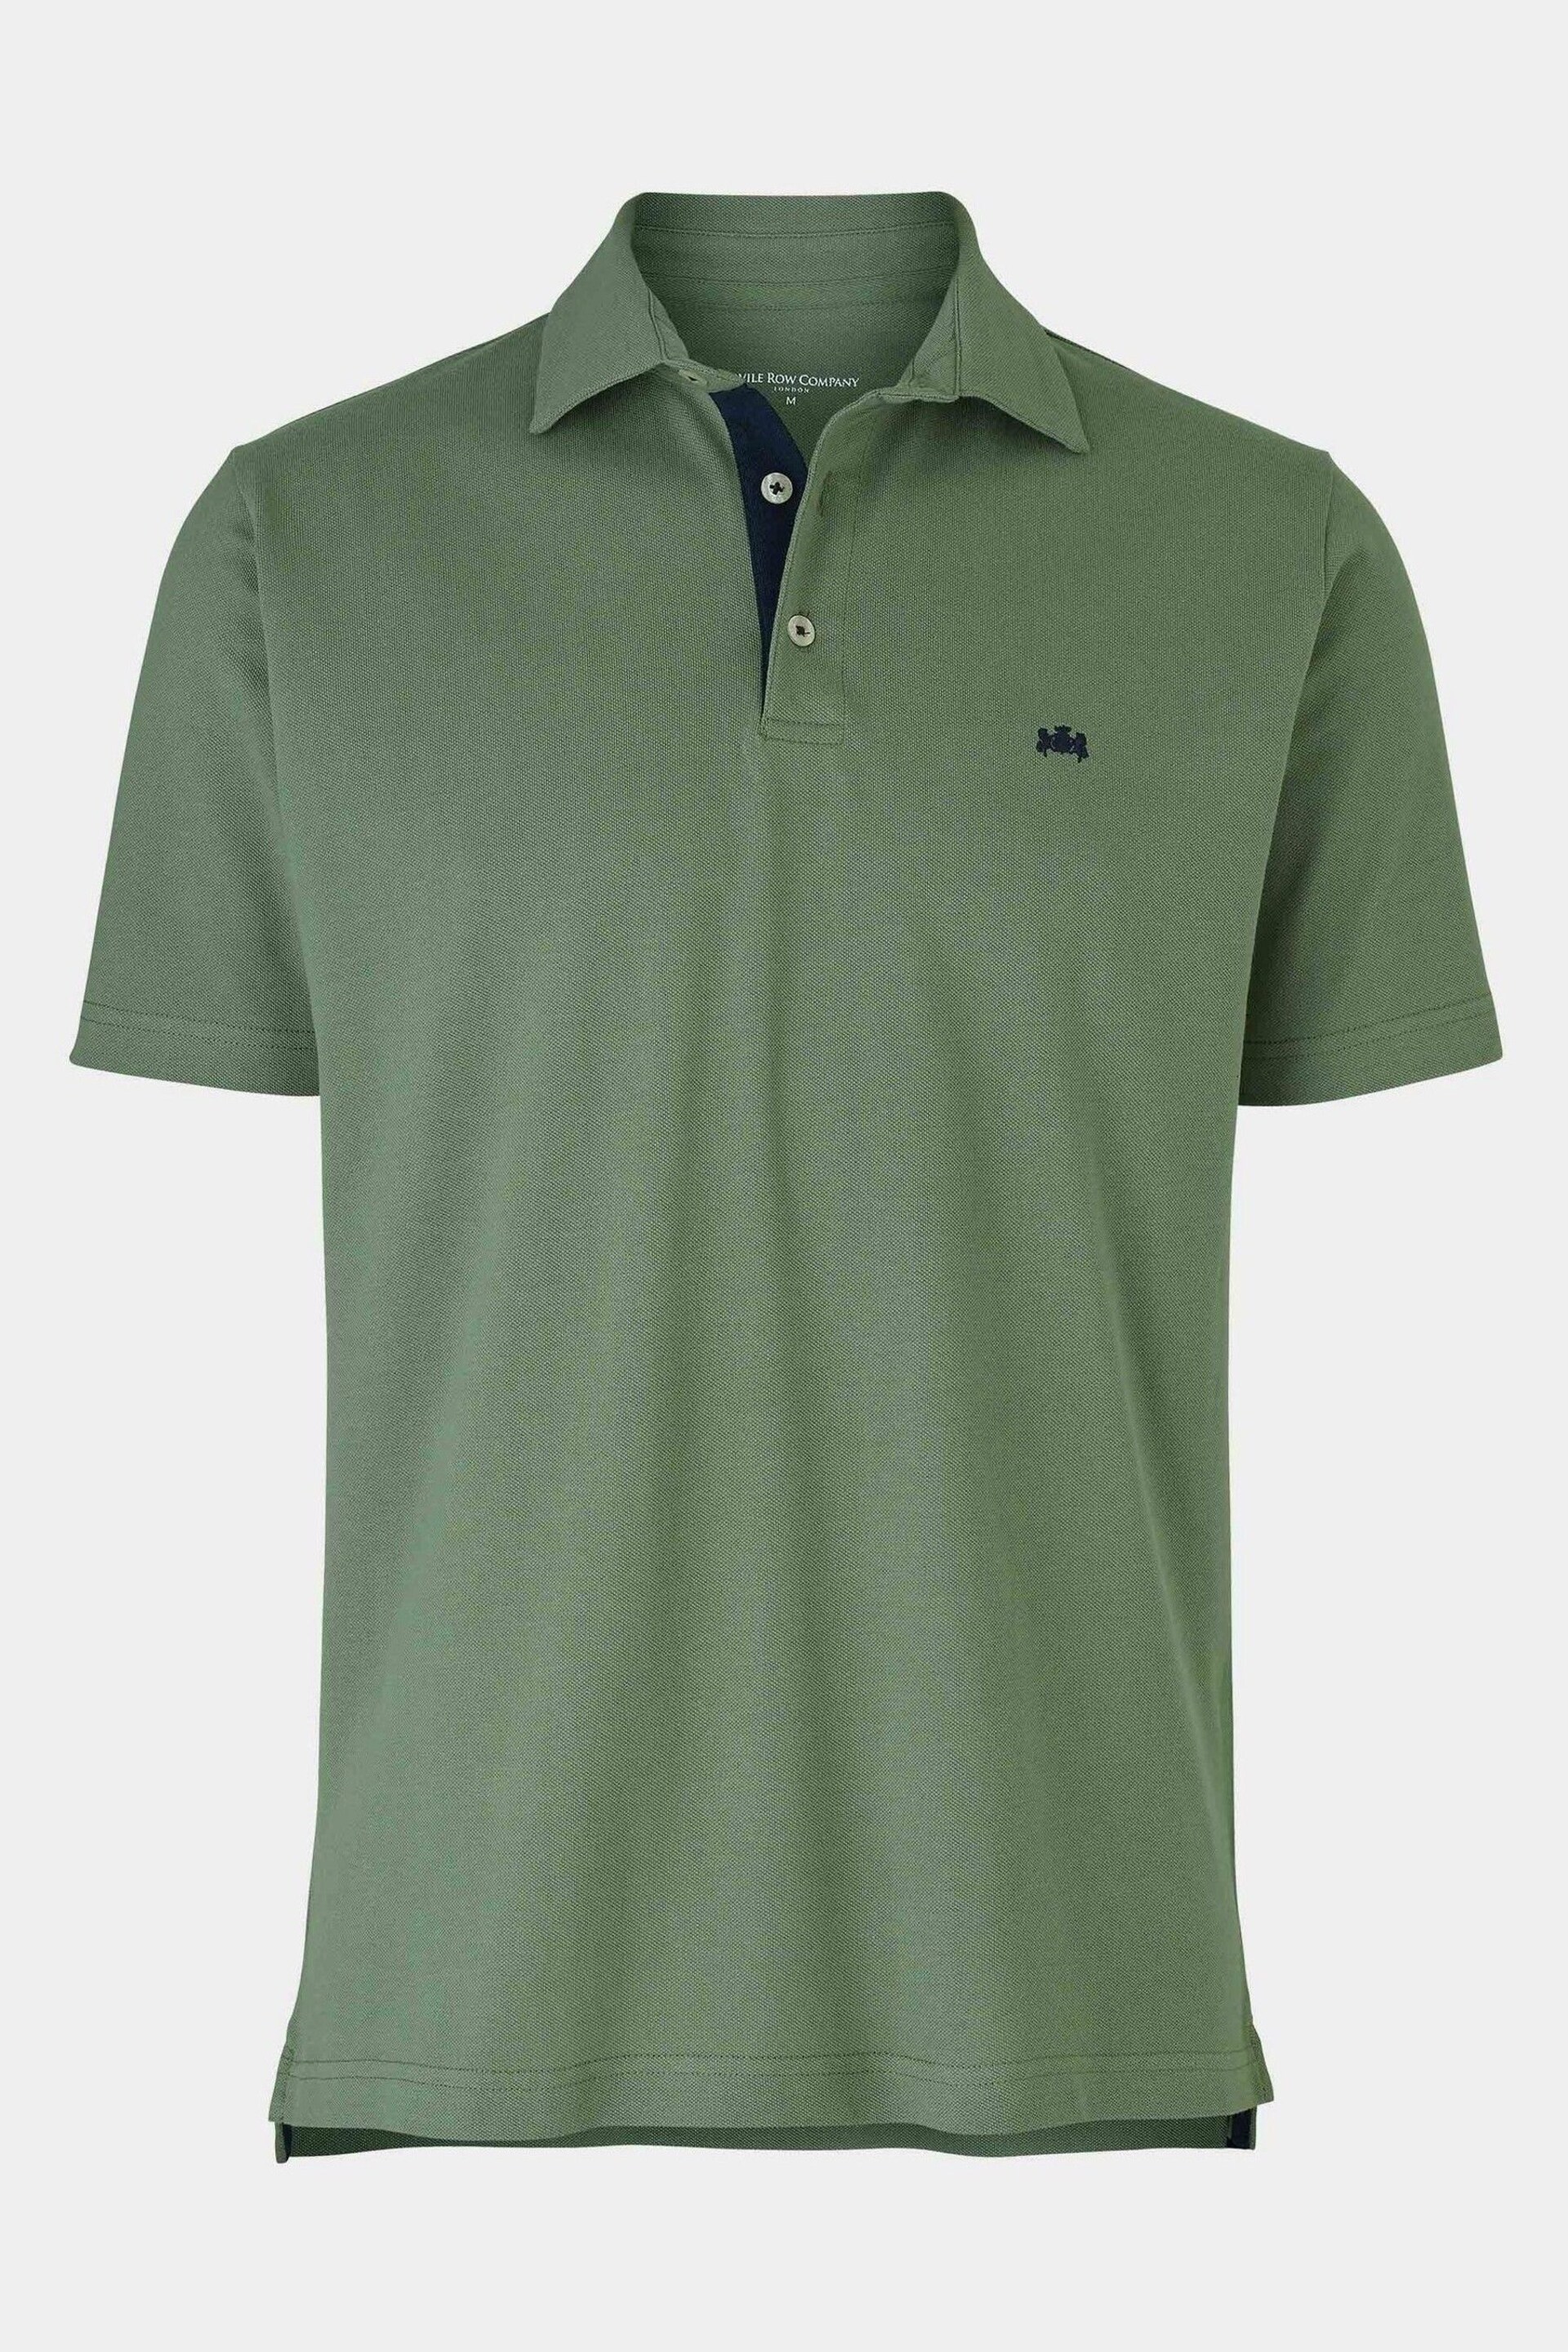 The Savile Row Company Green Cotton Short Sleeve Polo Shirt - Image 3 of 4